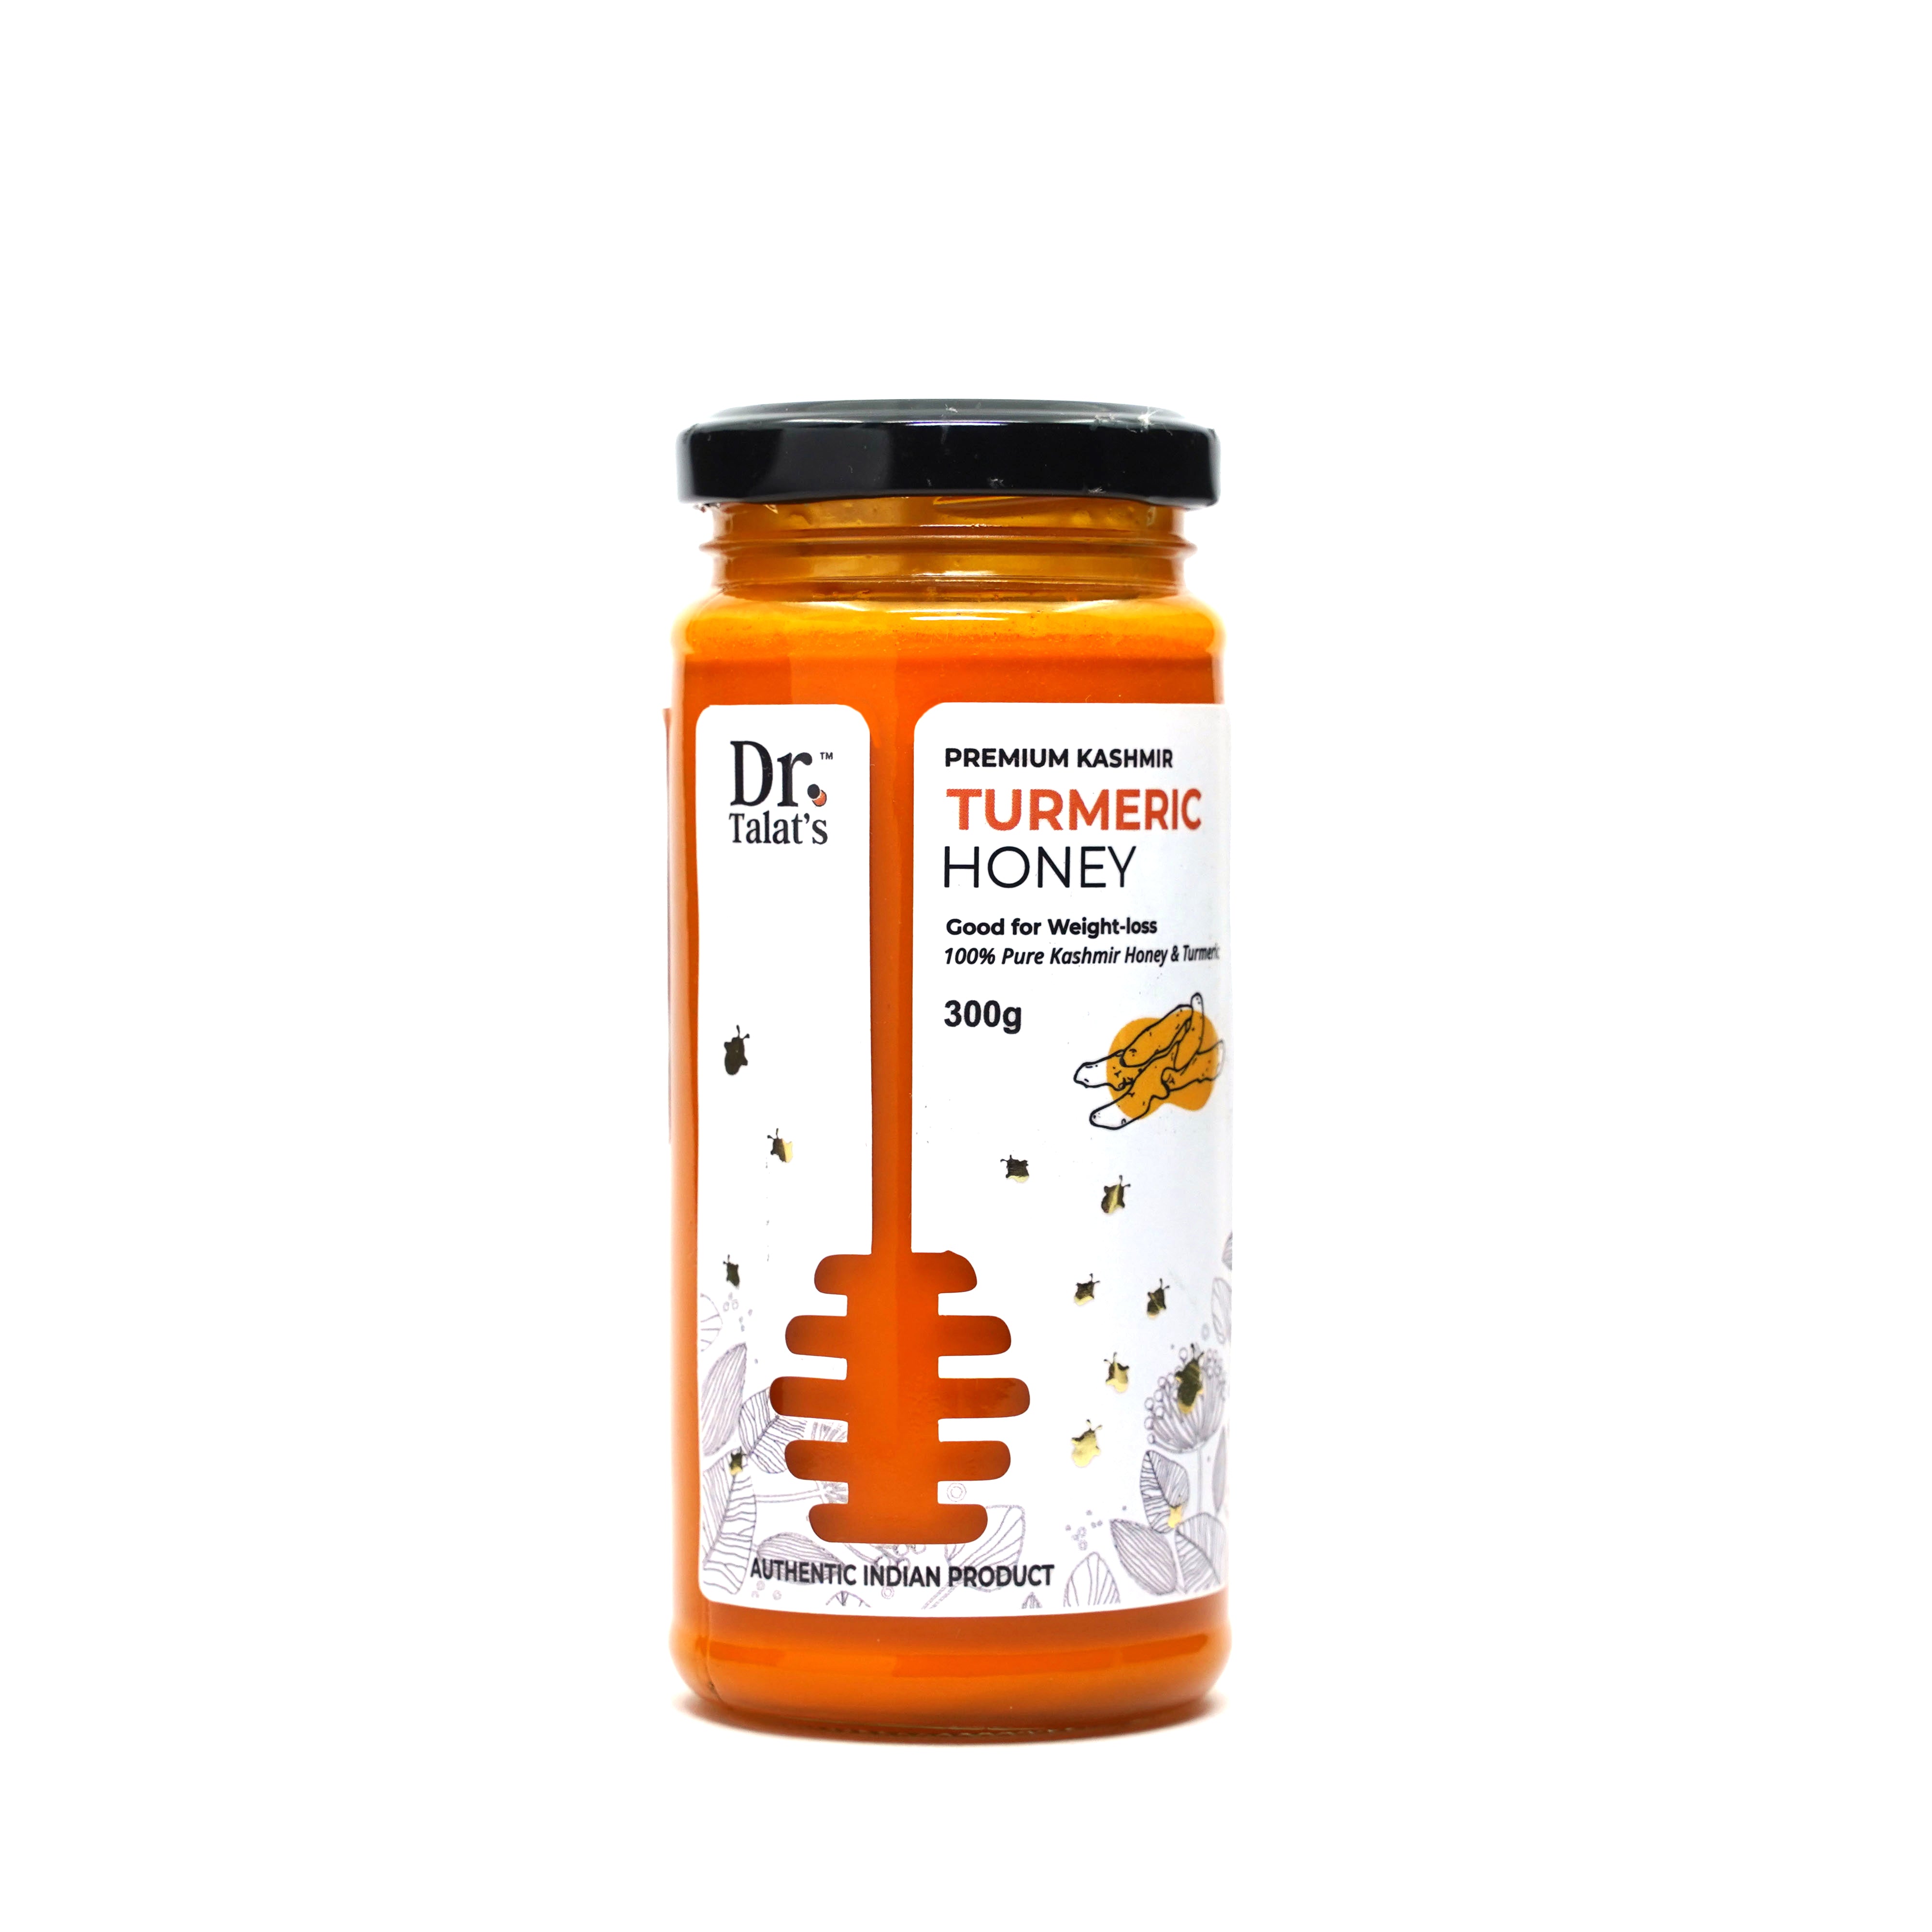 Premium Kashmir Turmeric Honey